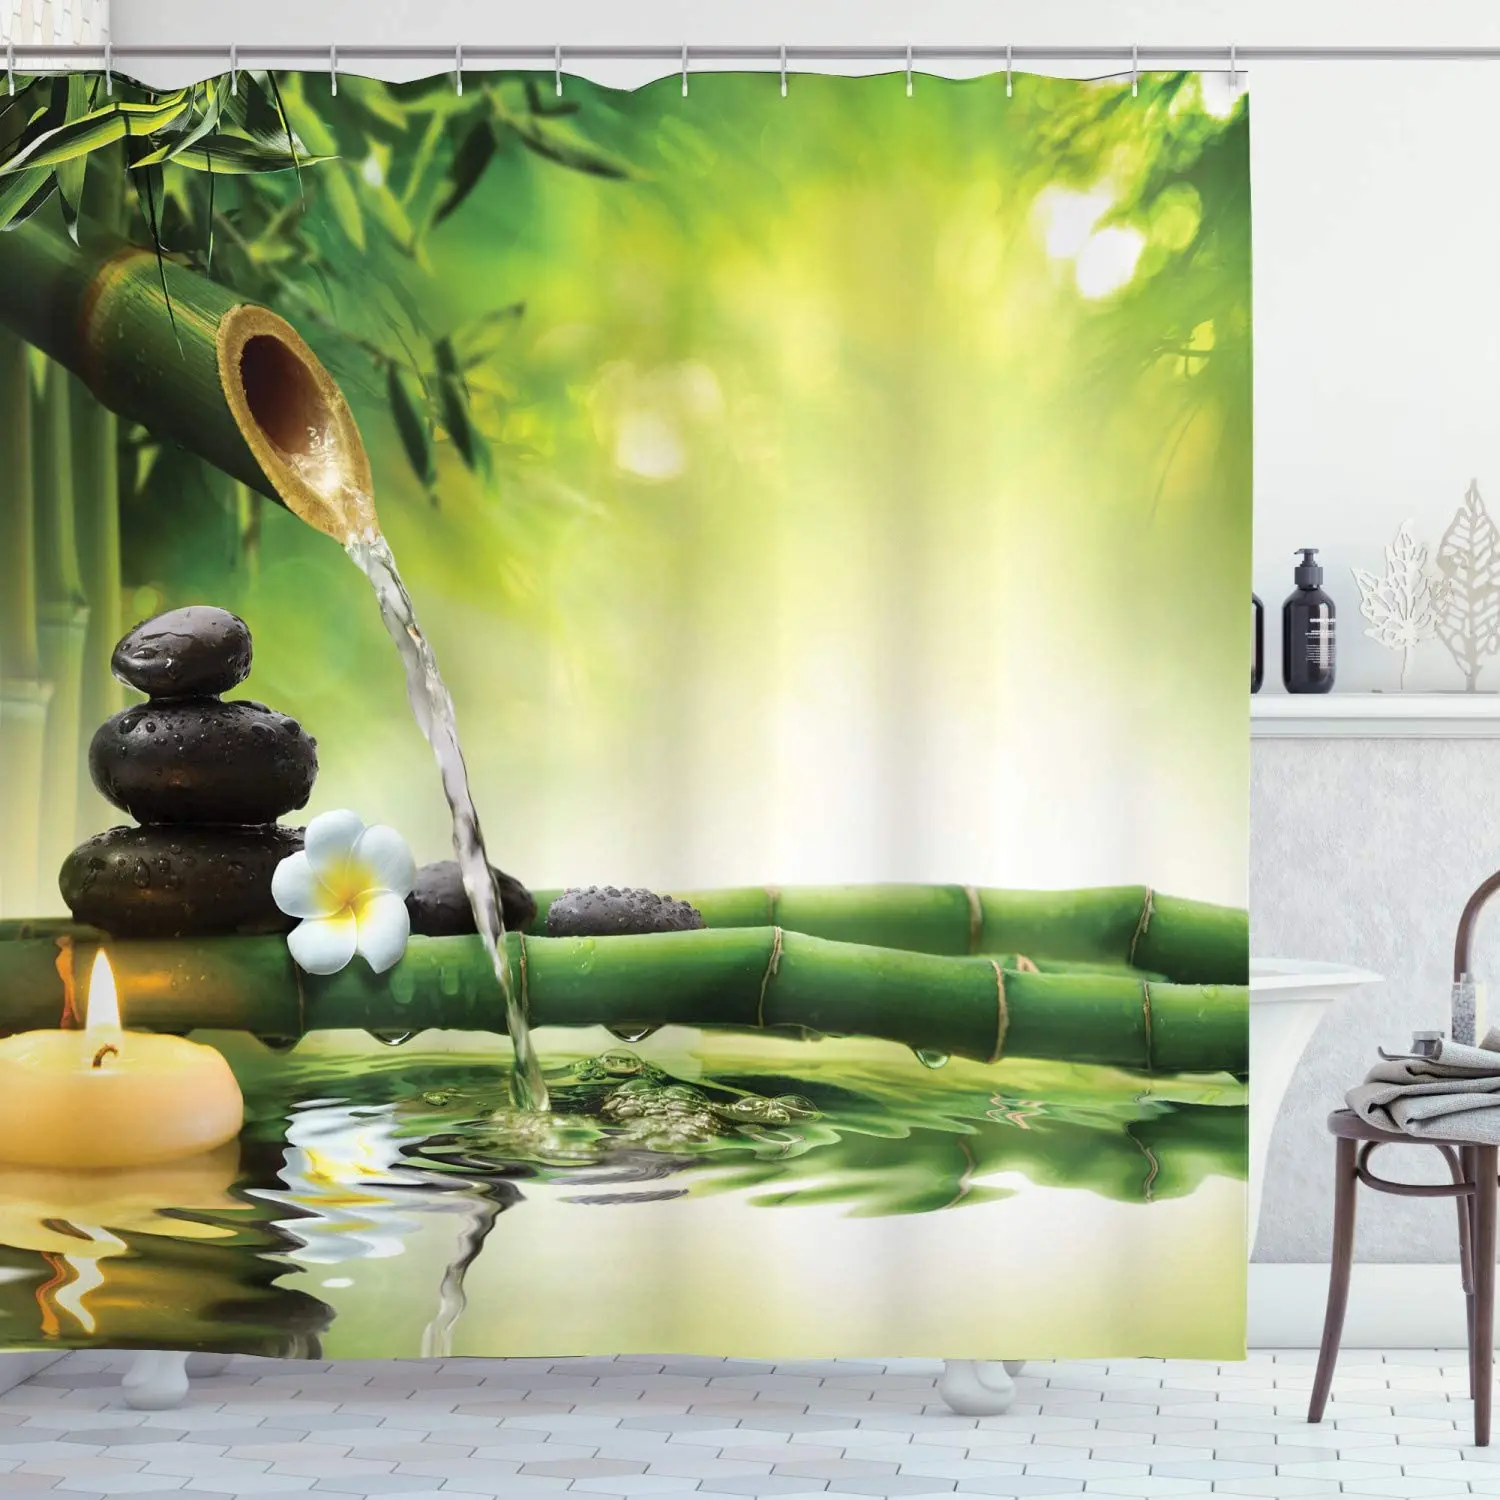 Zen Garden Scenery Shower Curtain Meditation Green Bamboo Stalks Candle Black Stones Cloth Fabric Bathroom Decor Set with Hooks